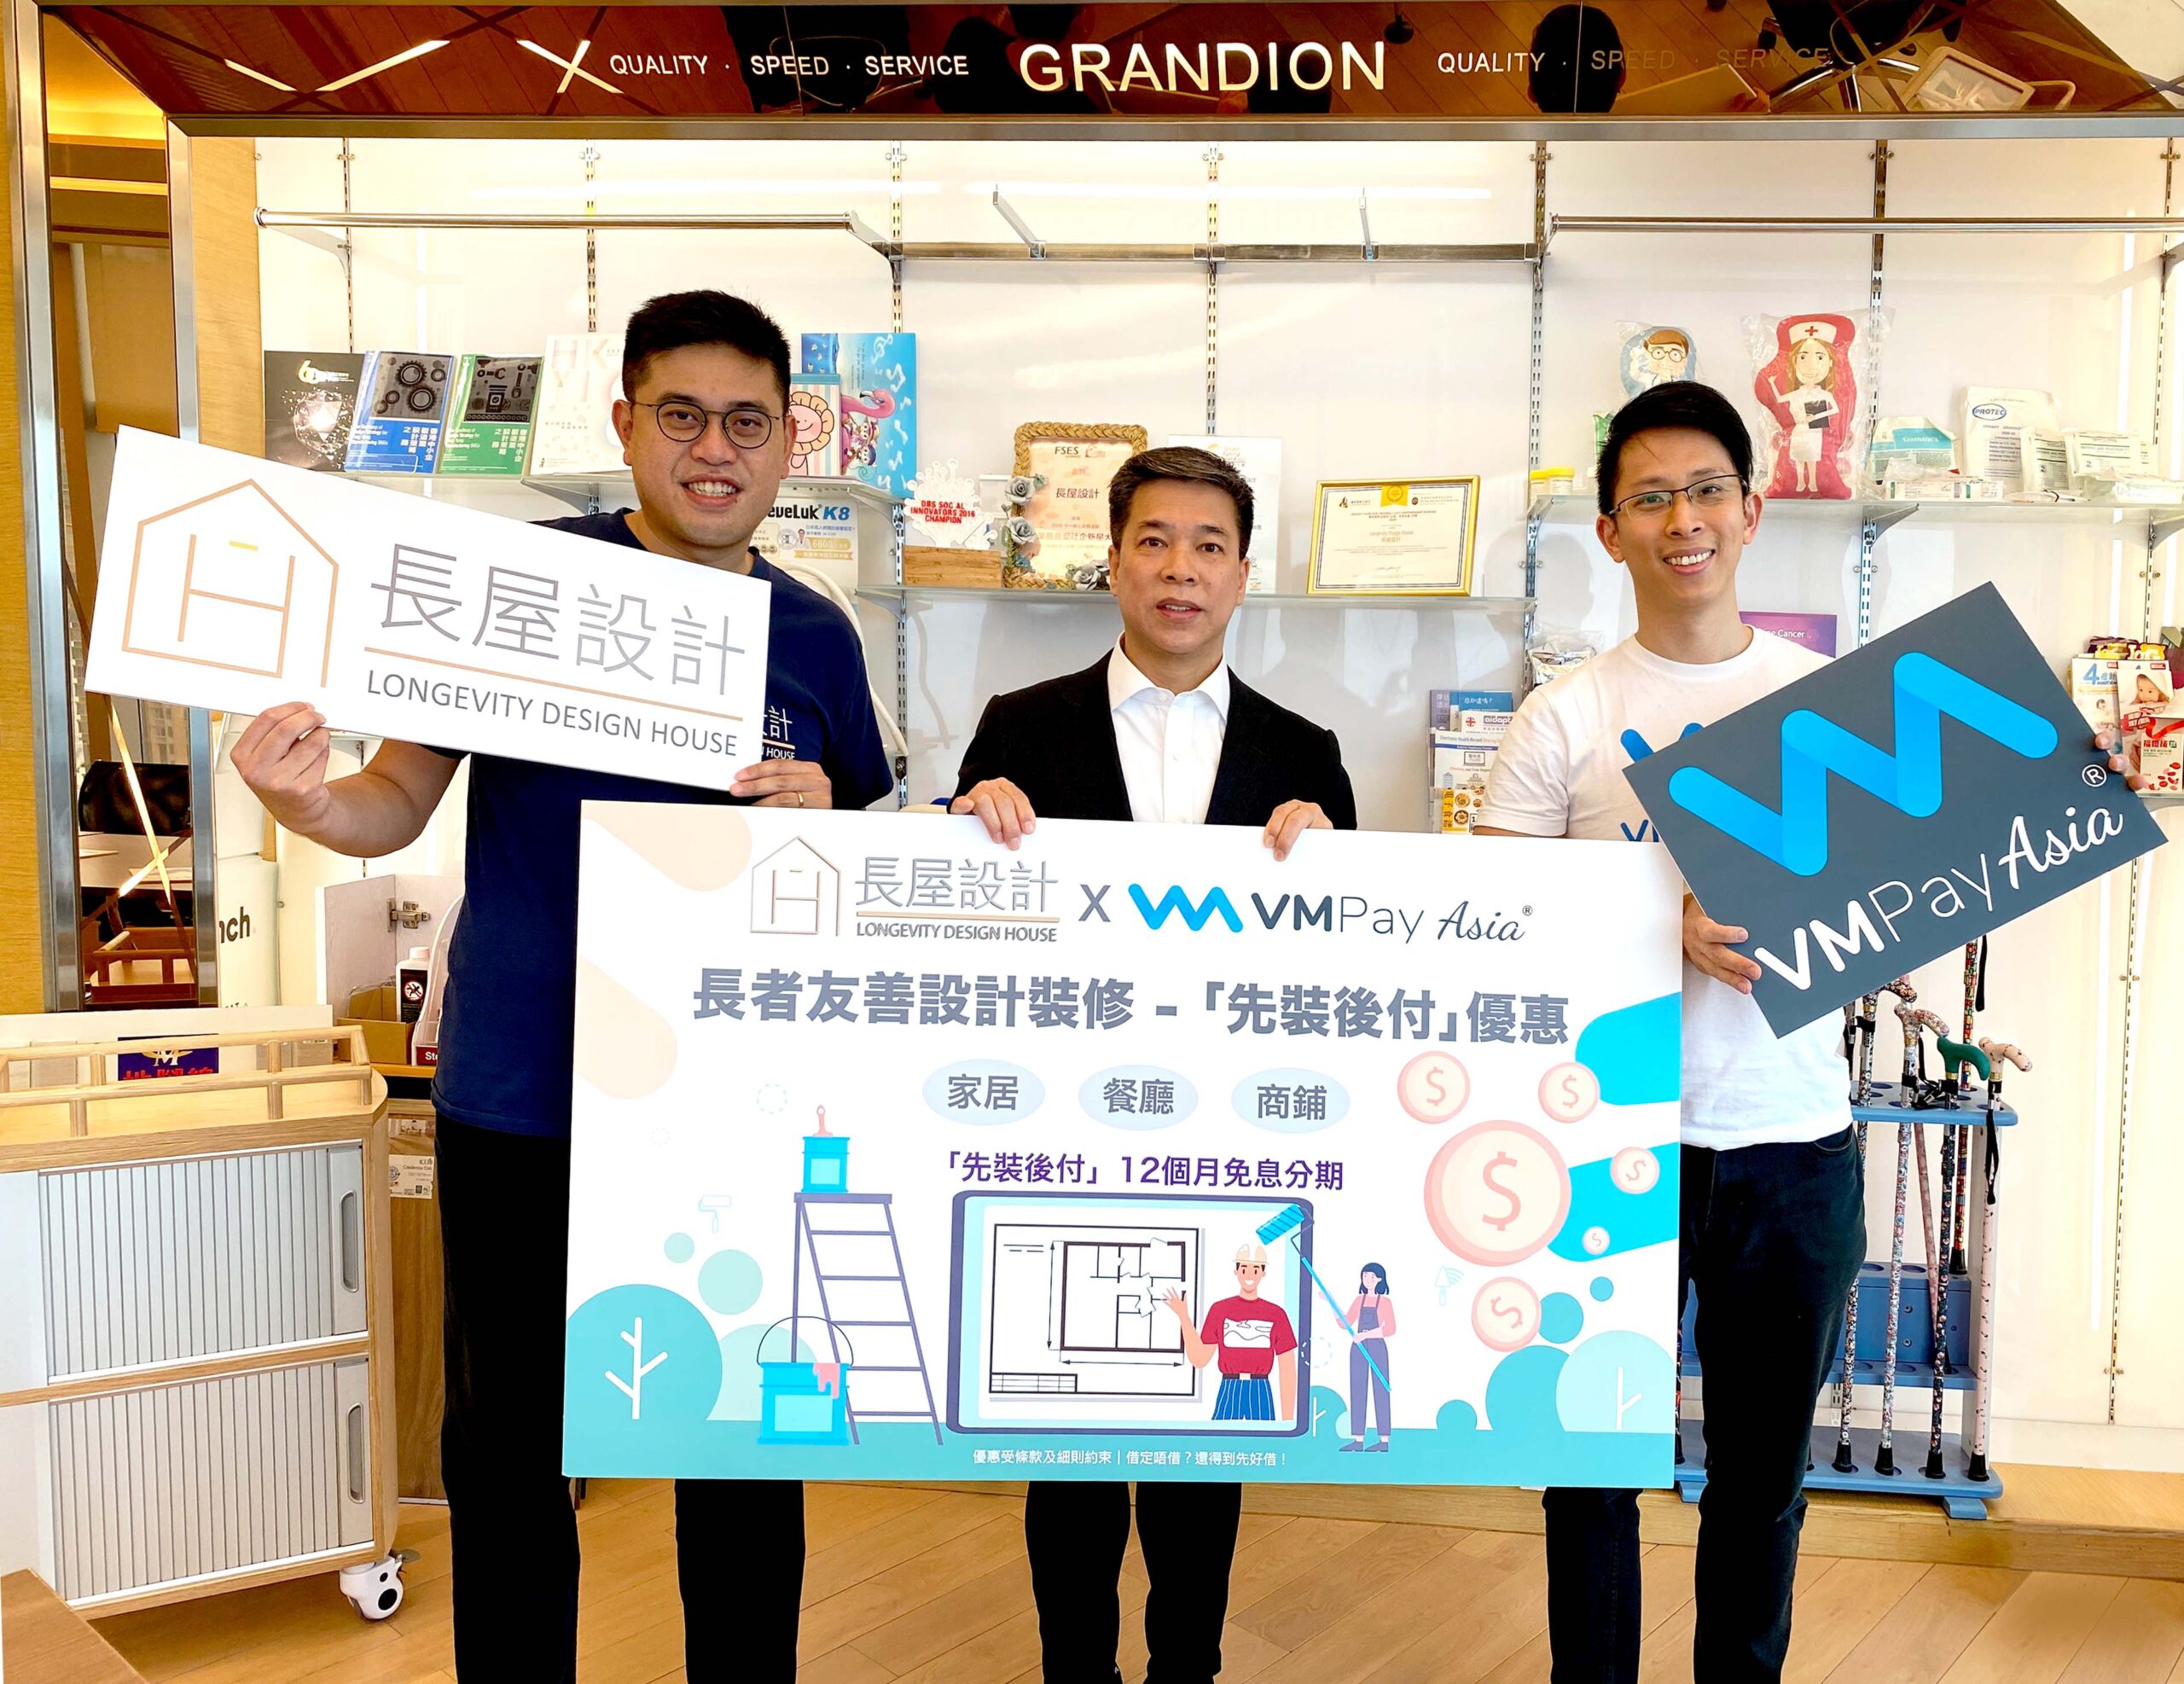 VMPay Asia夥社企長屋設計推出全港首個長者友善設計「先裝後付」優惠